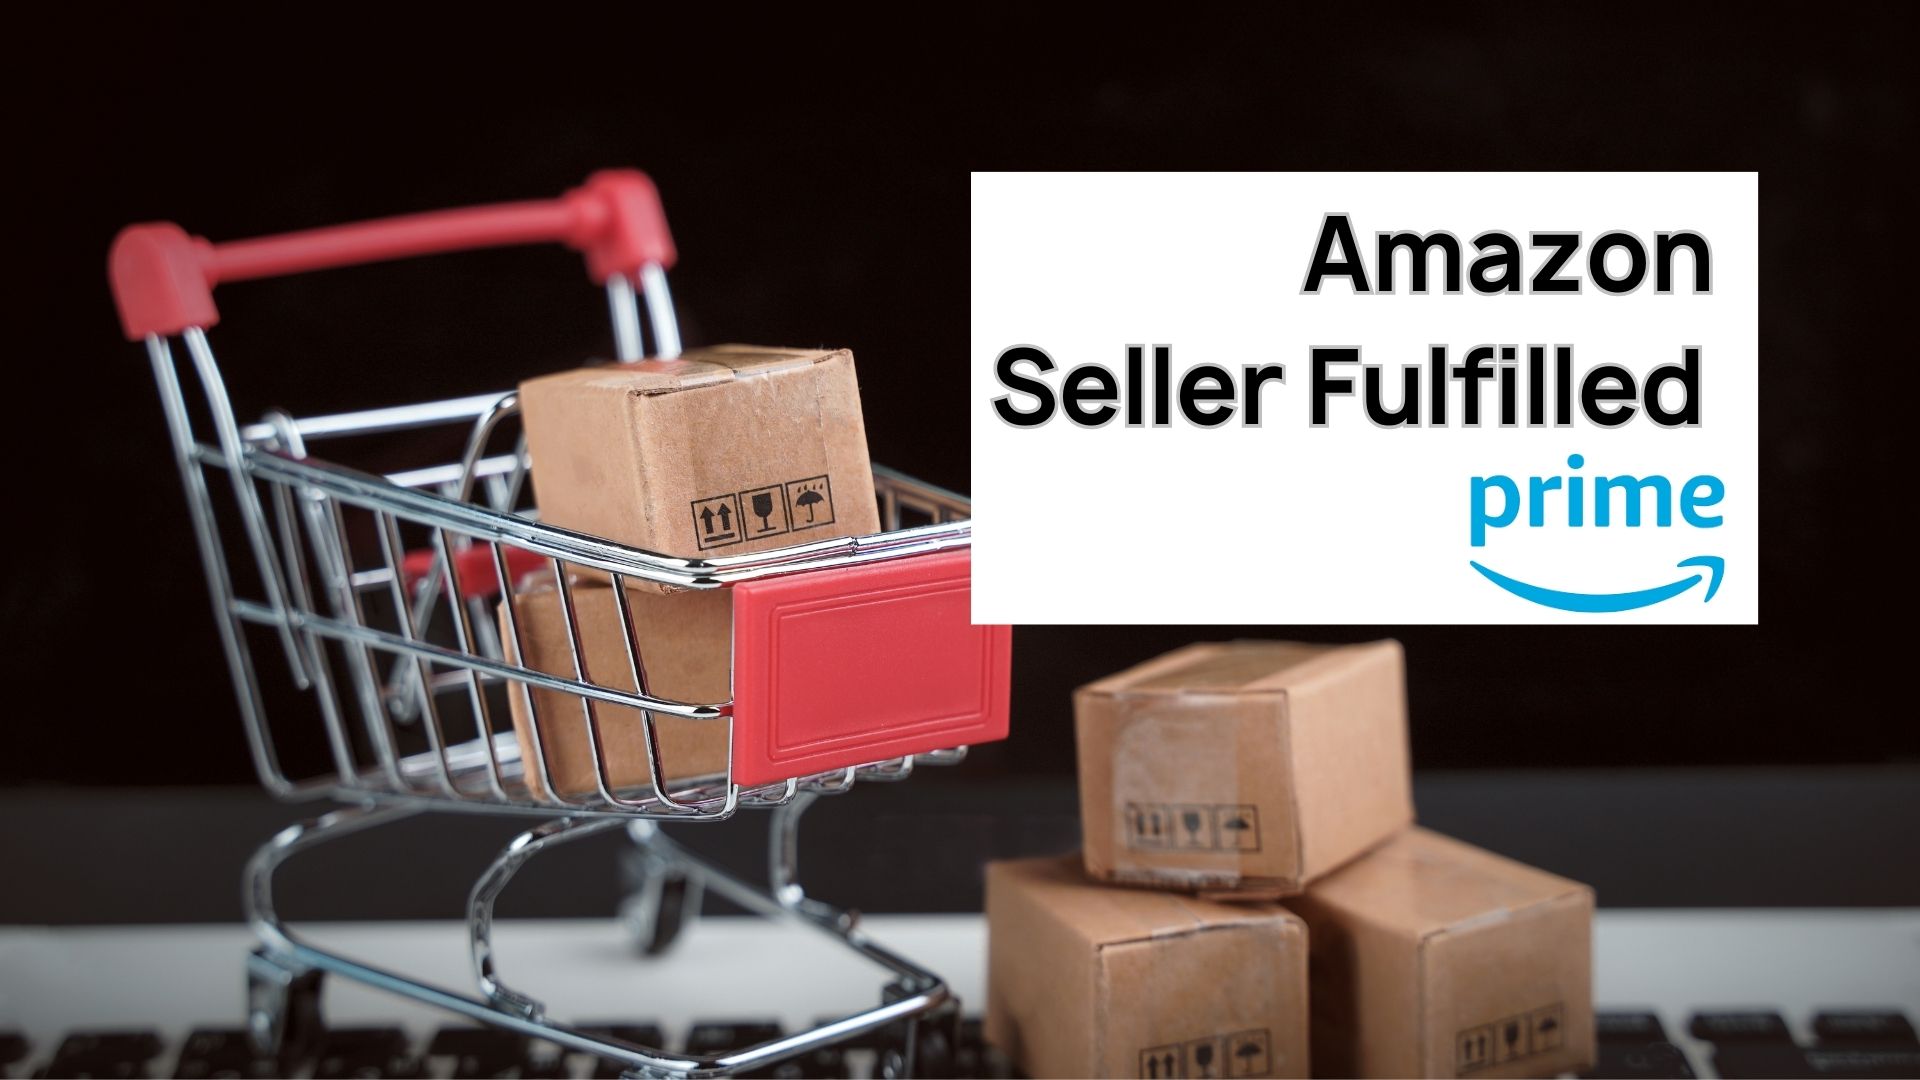 Amazon Seller Fulfilled Prime